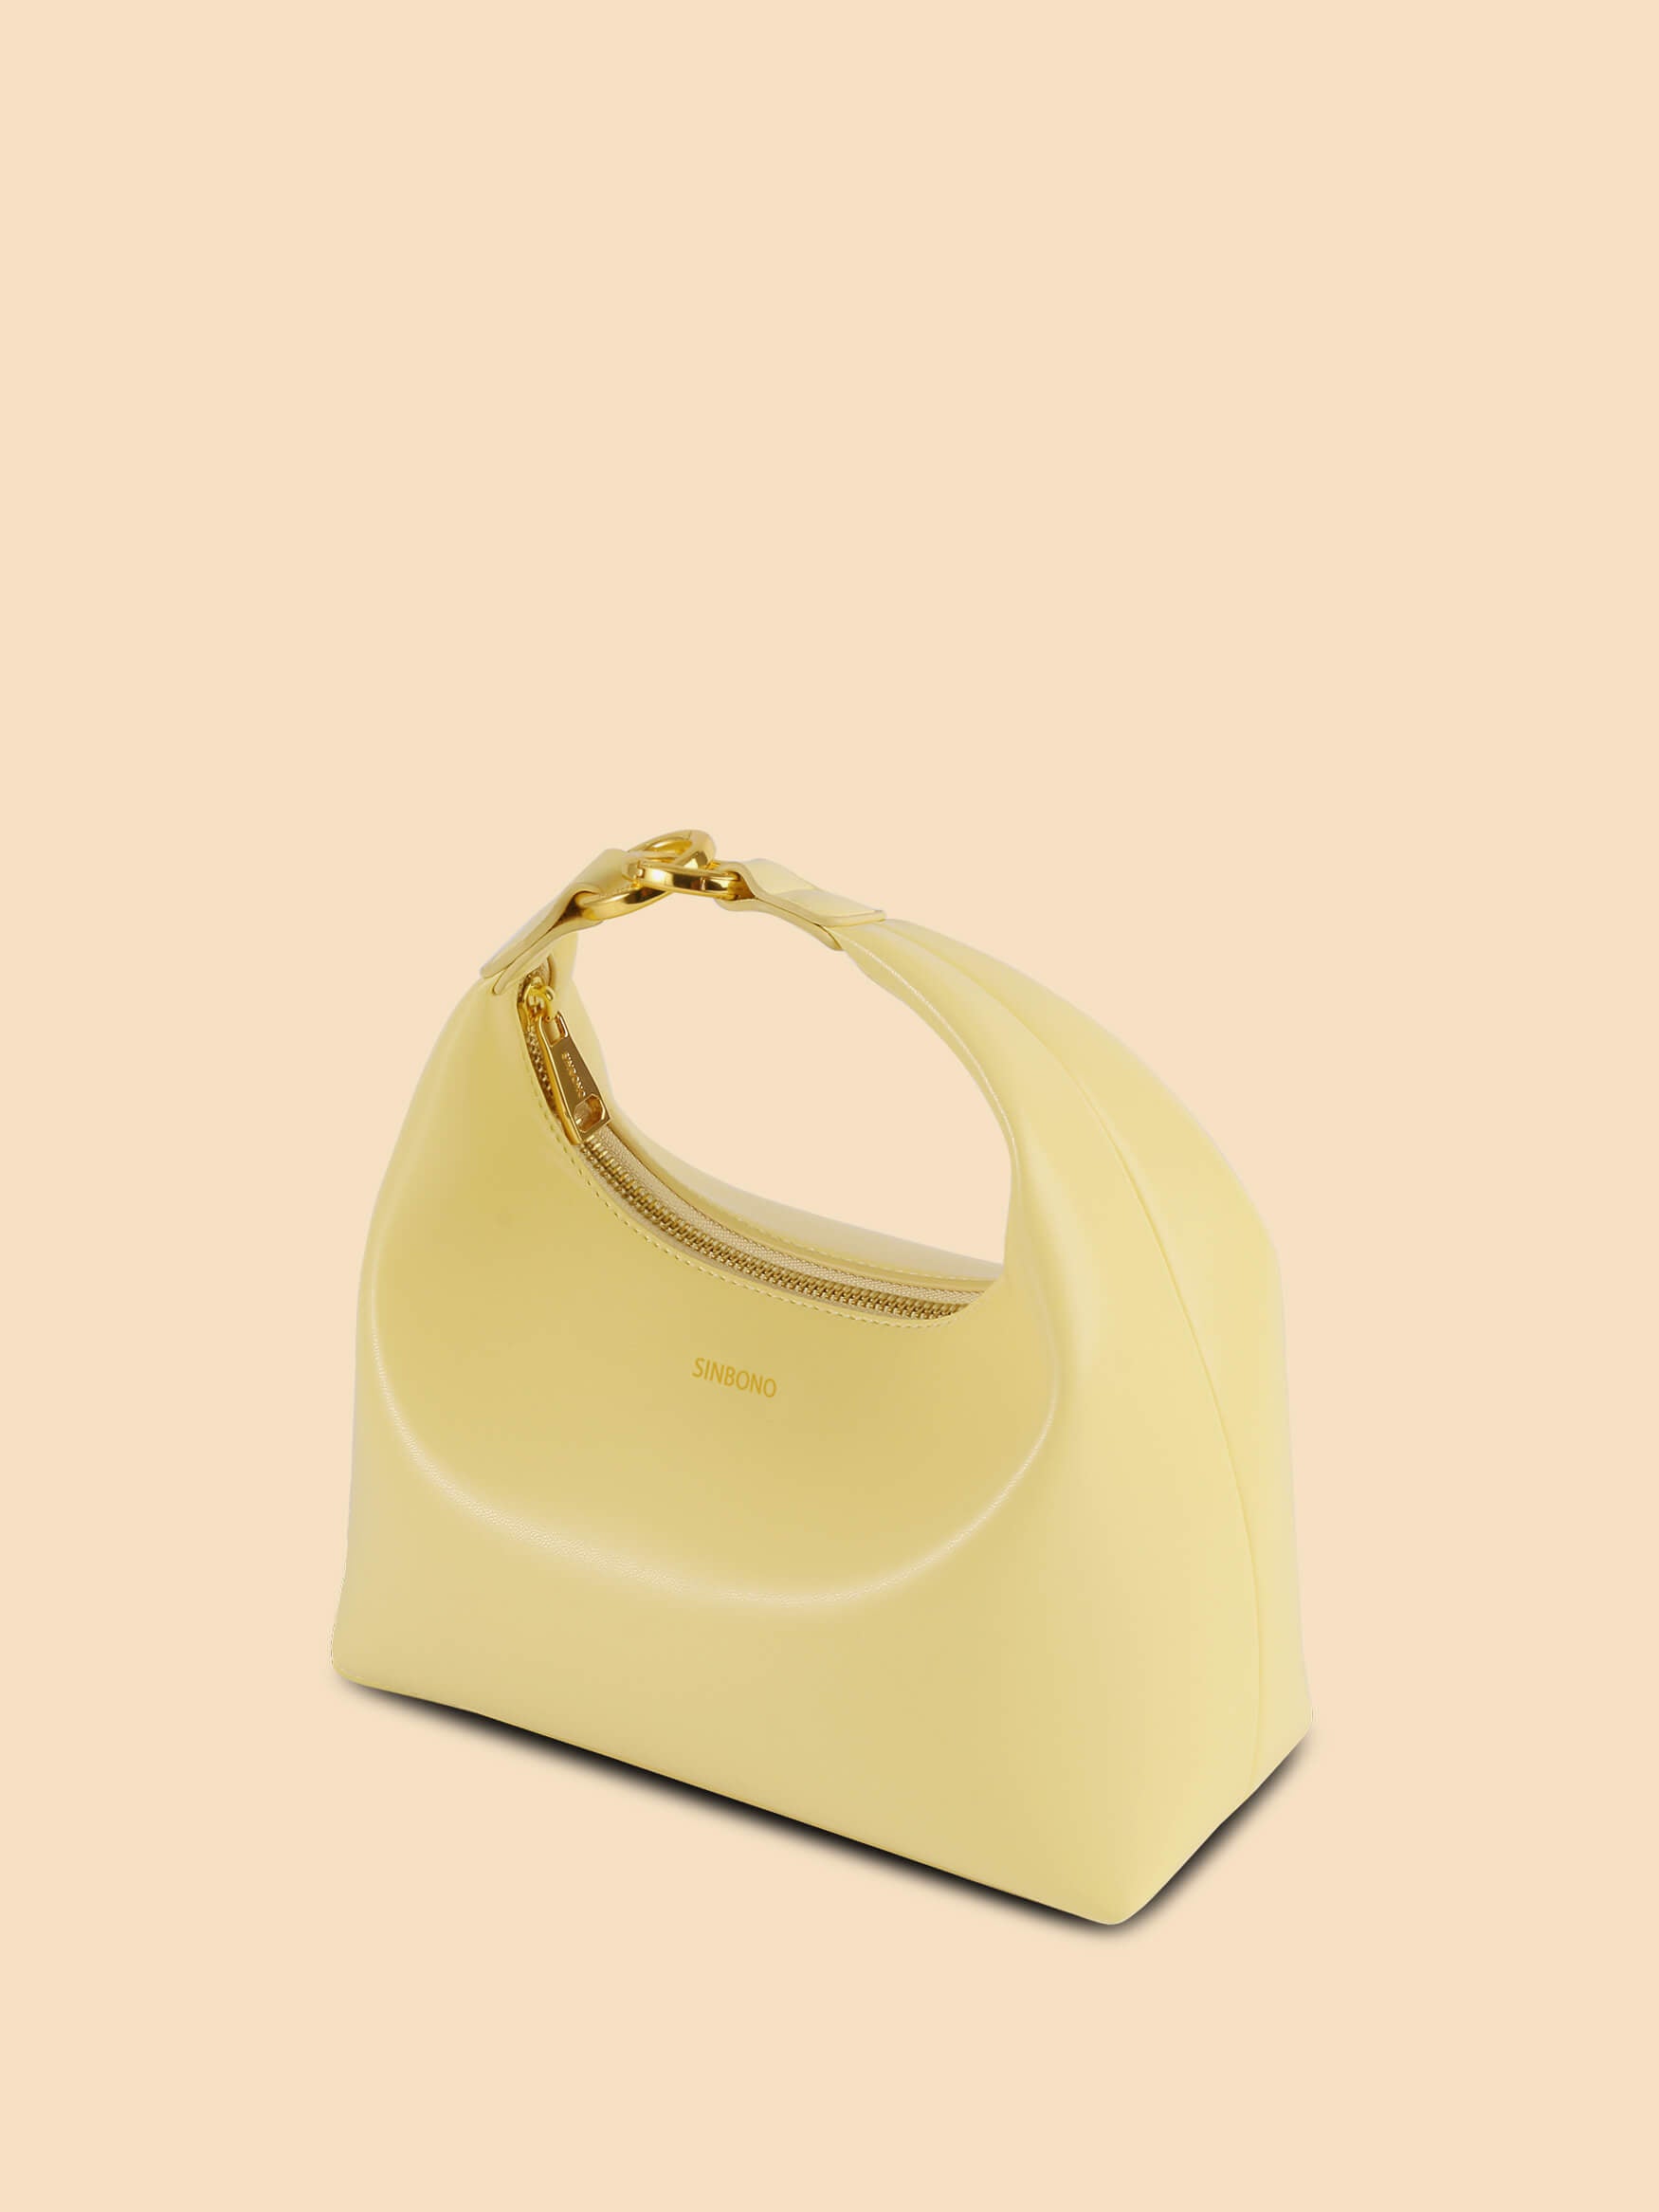 SINBONO Light Yellow Shoulder Satchel Crossbody Women's Handbags